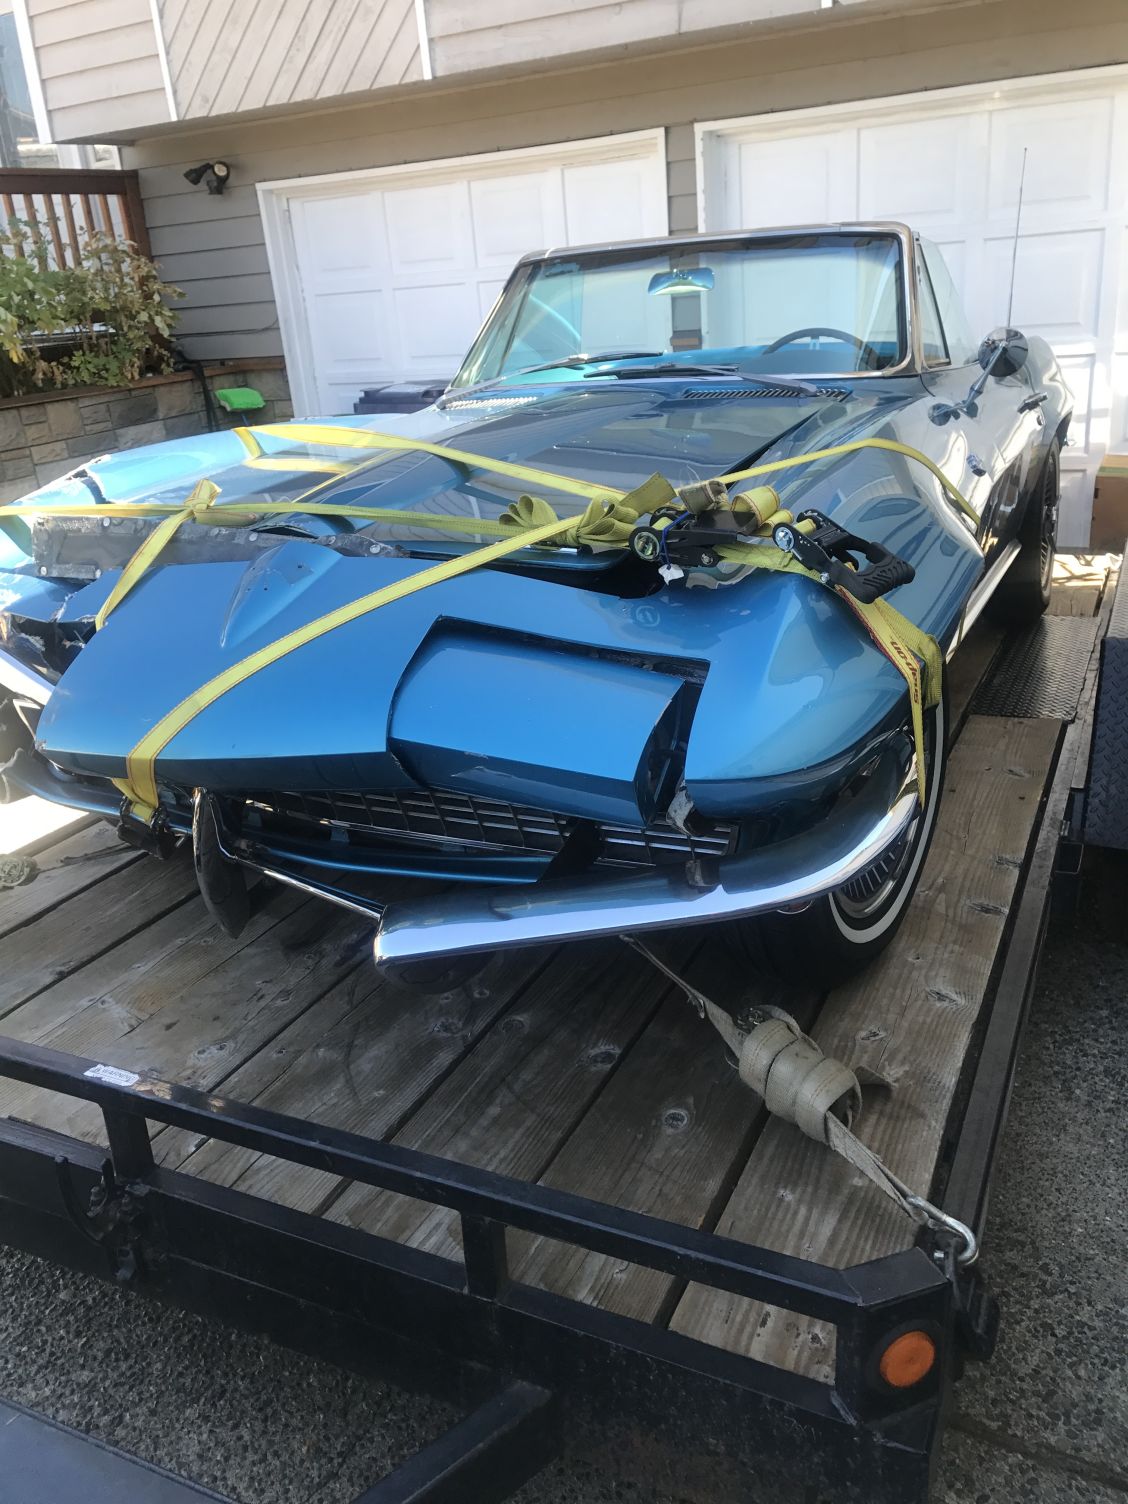 A friend crashed this owner's classic C2 Corvette.